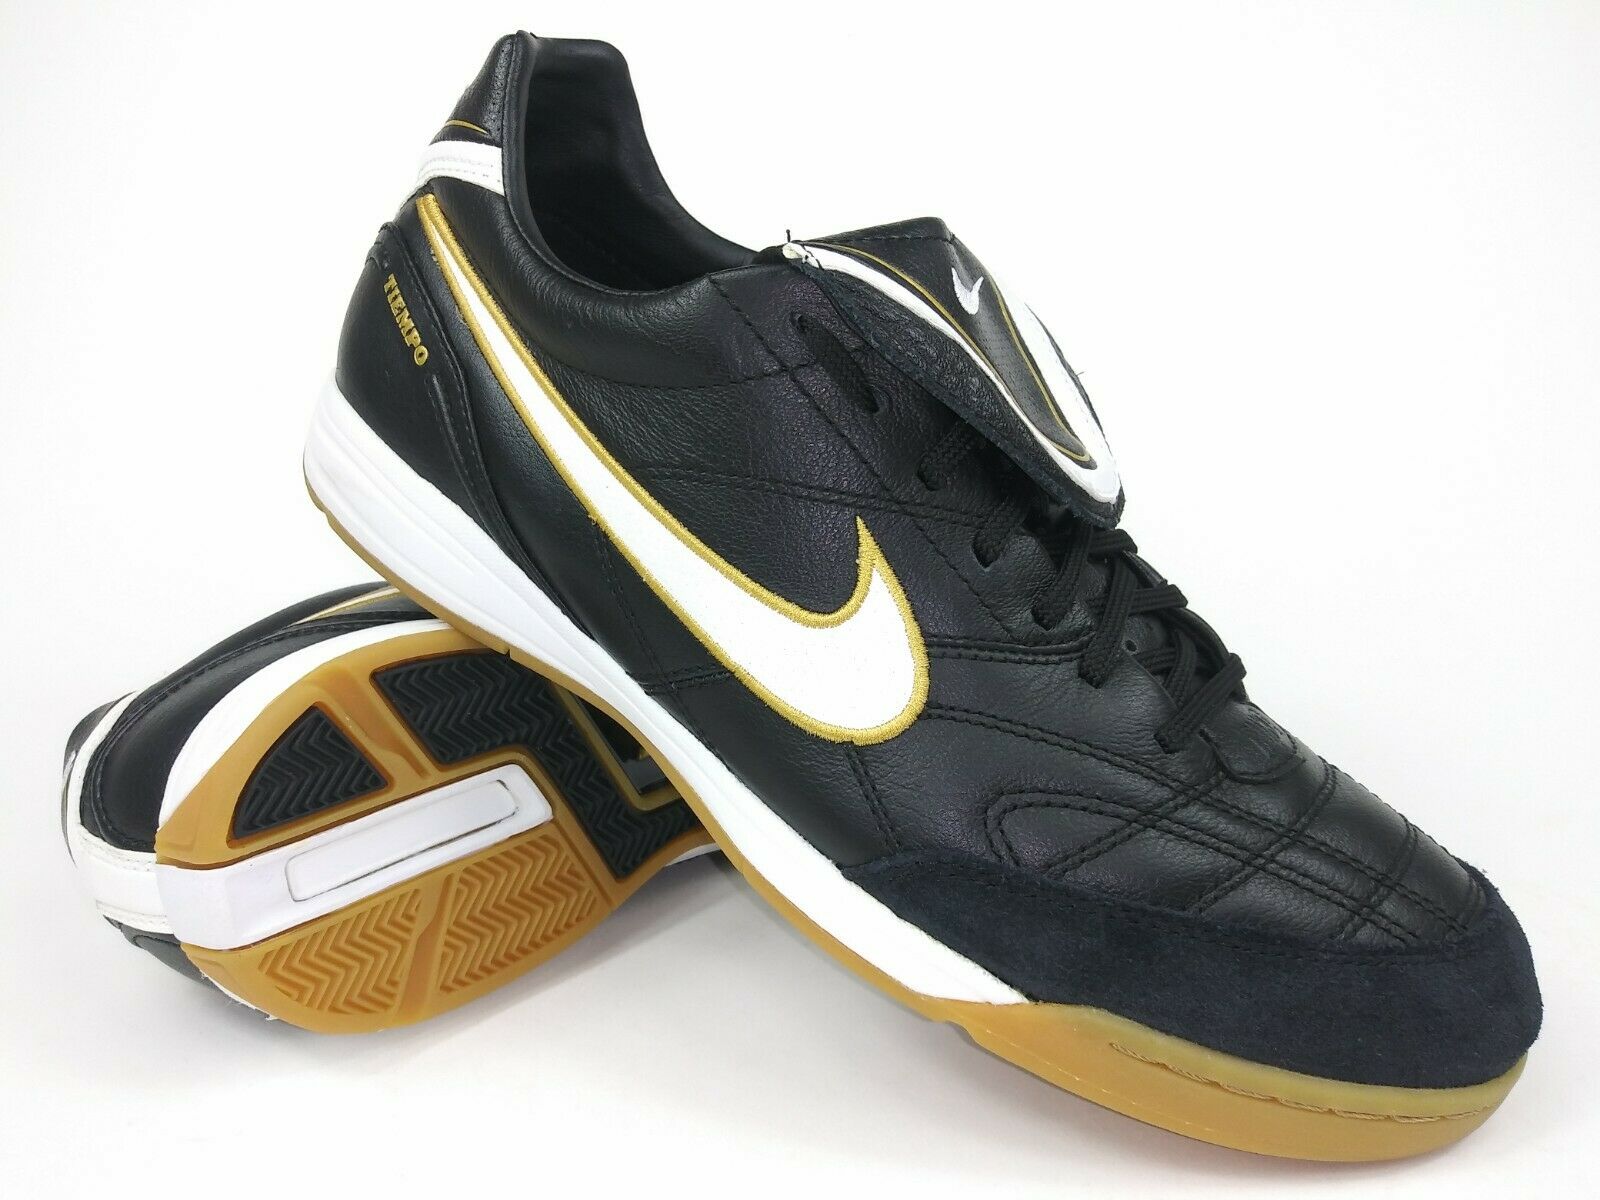 Nike Tiempo lll IC Indoor Black Gold Villegas Footwear